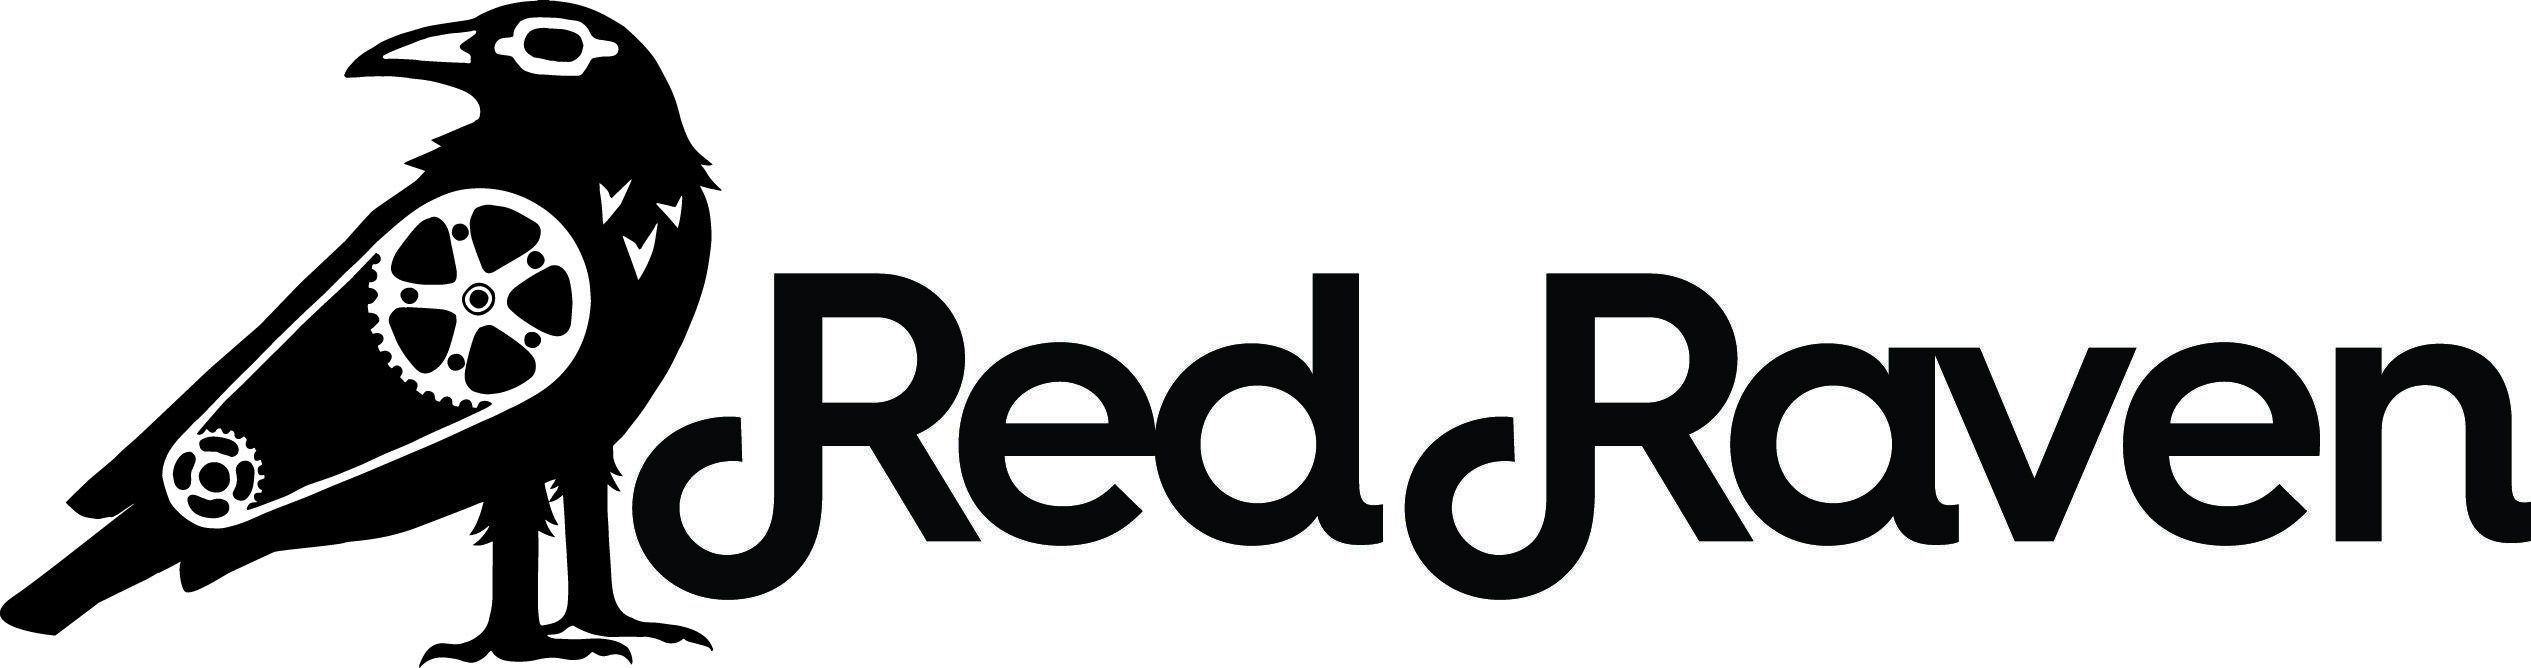 Red Raven Logo - Red Raven